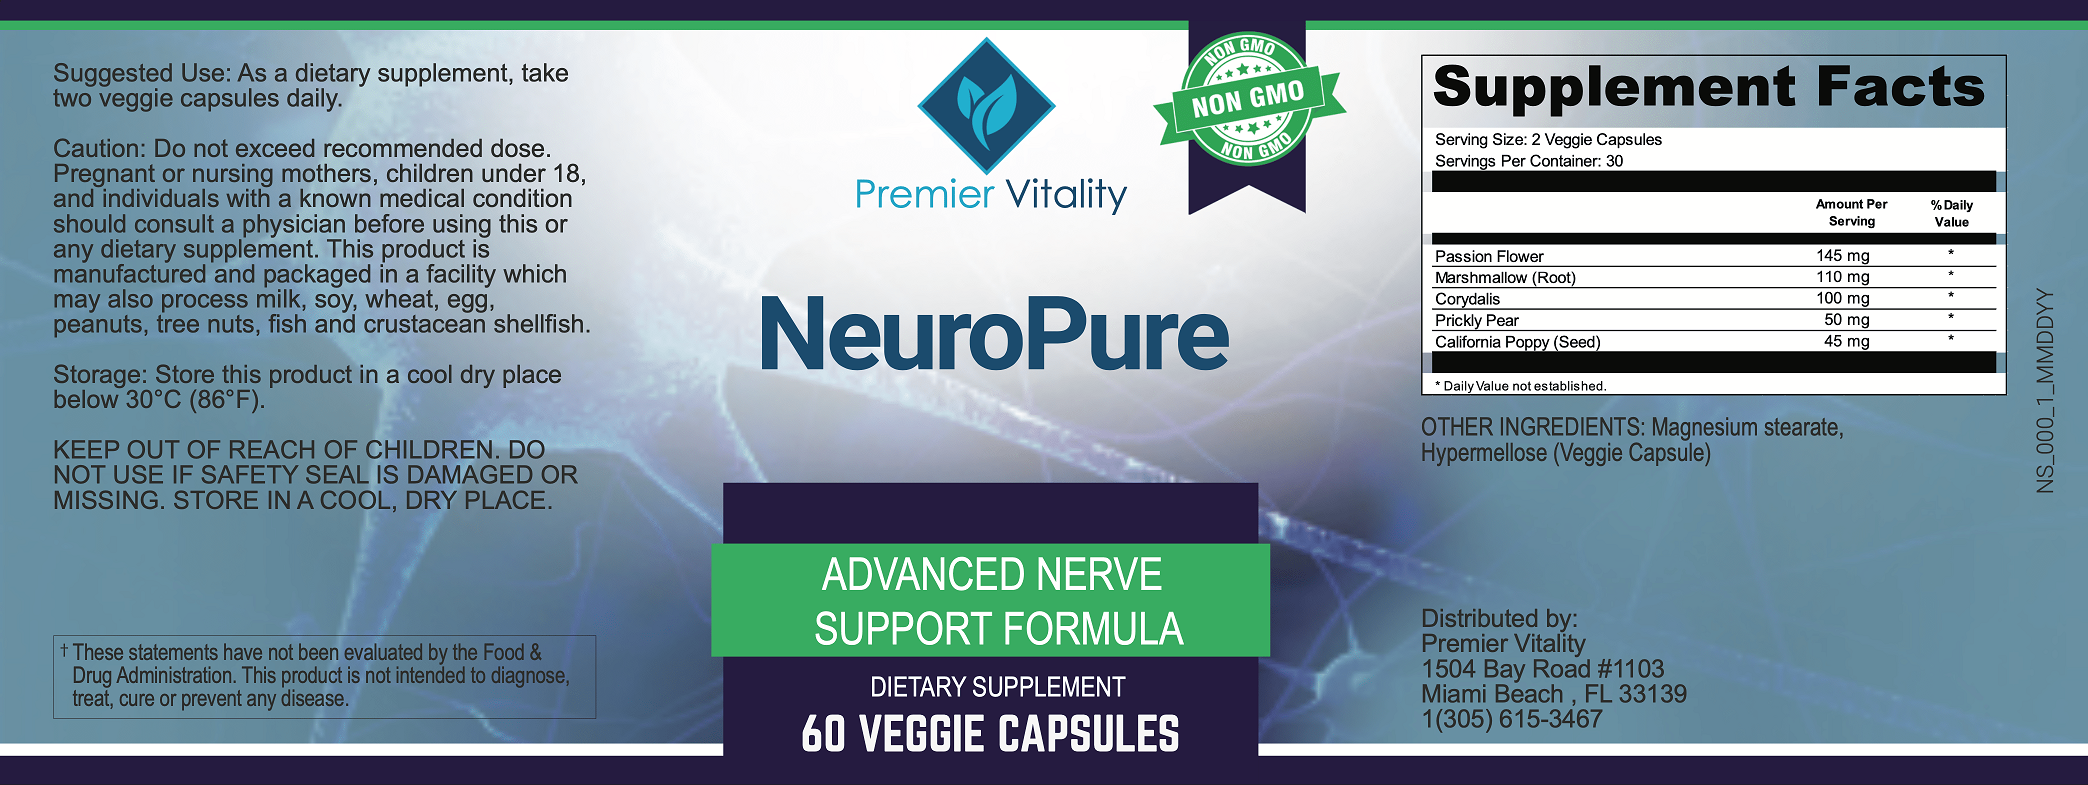 Premier Vitality NeuroPure 6 Ingredients